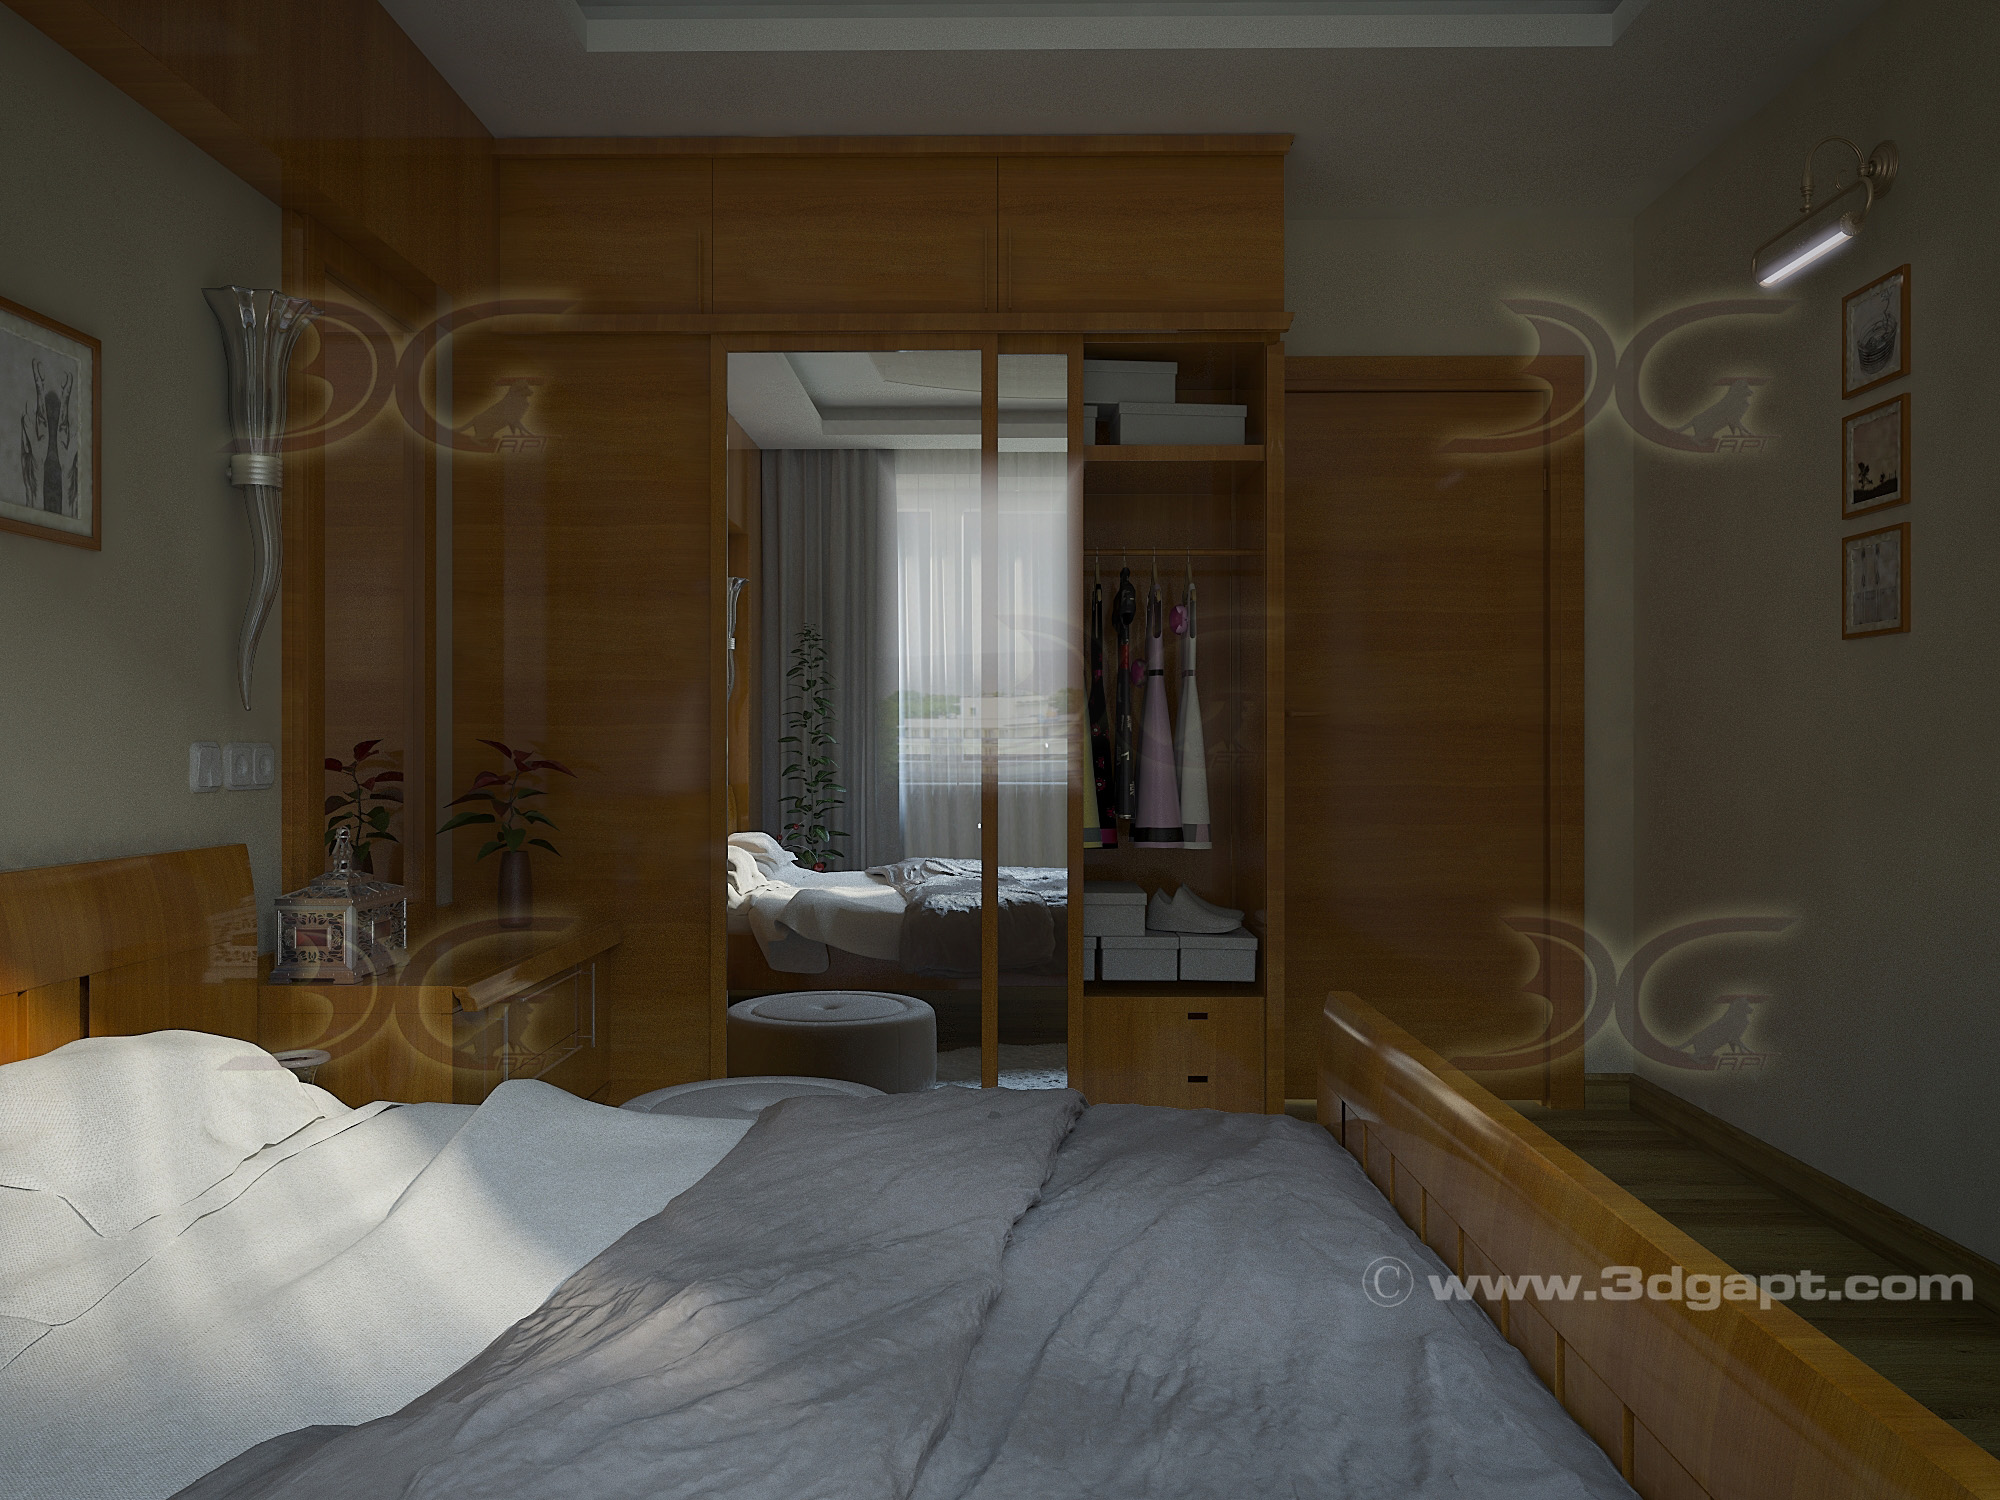 architecture interior bedroom-2 006